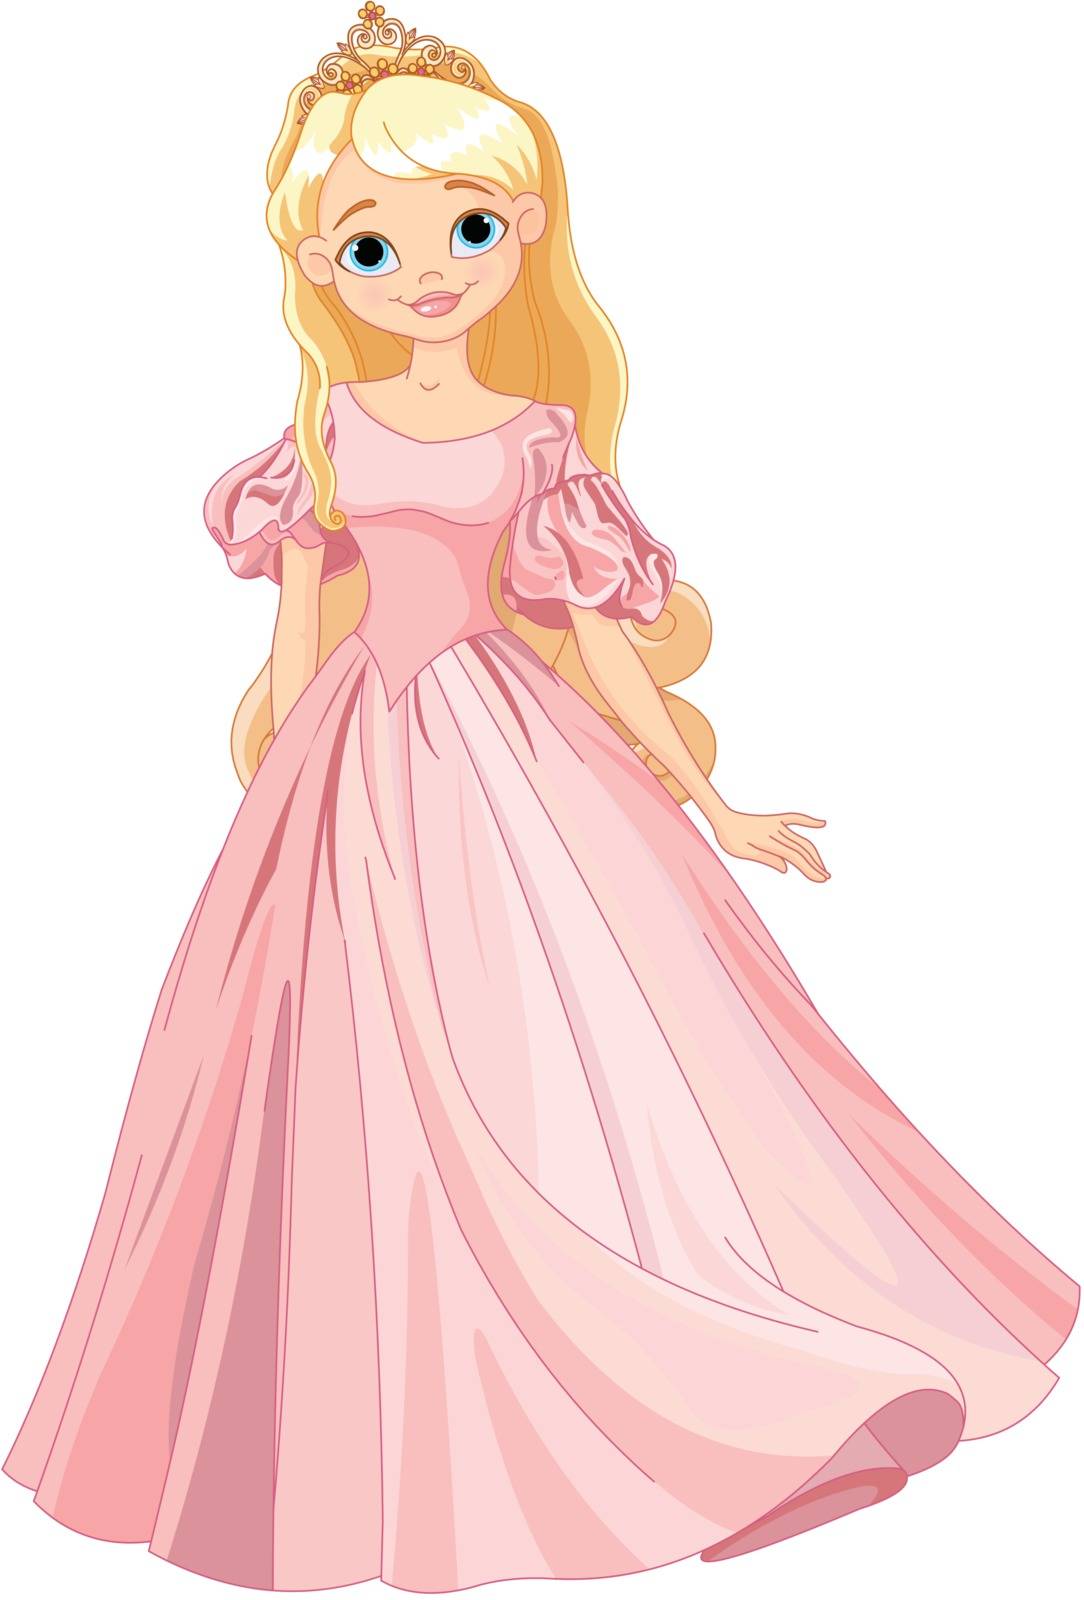 Illustration of beautiful princess